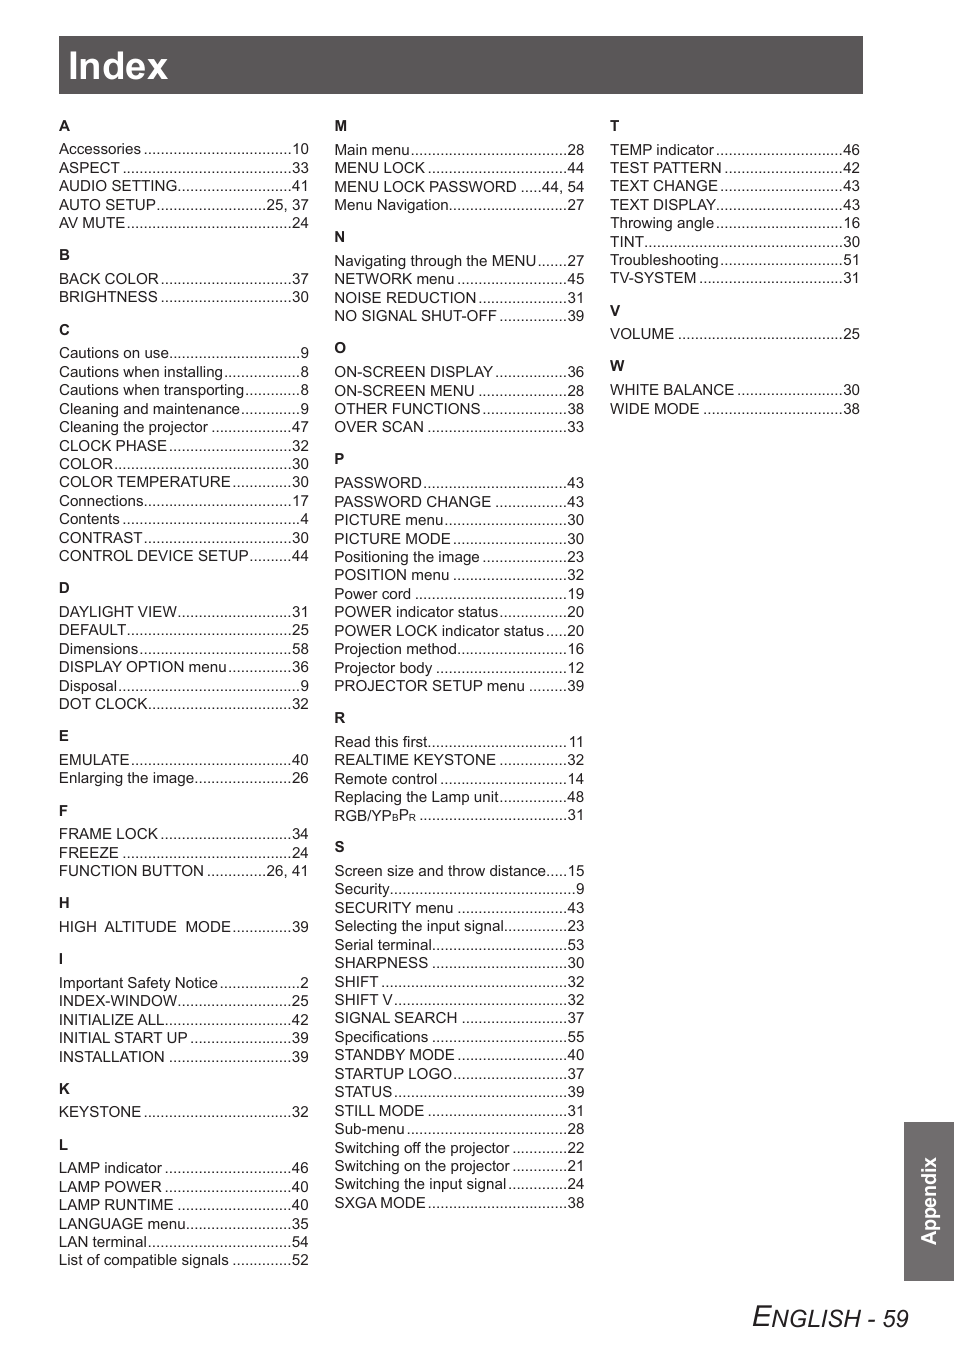 Index, Nglish - 59, Appendix | Panasonic TQBJ0302 Manuel d'utilisation | Page 59 / 68